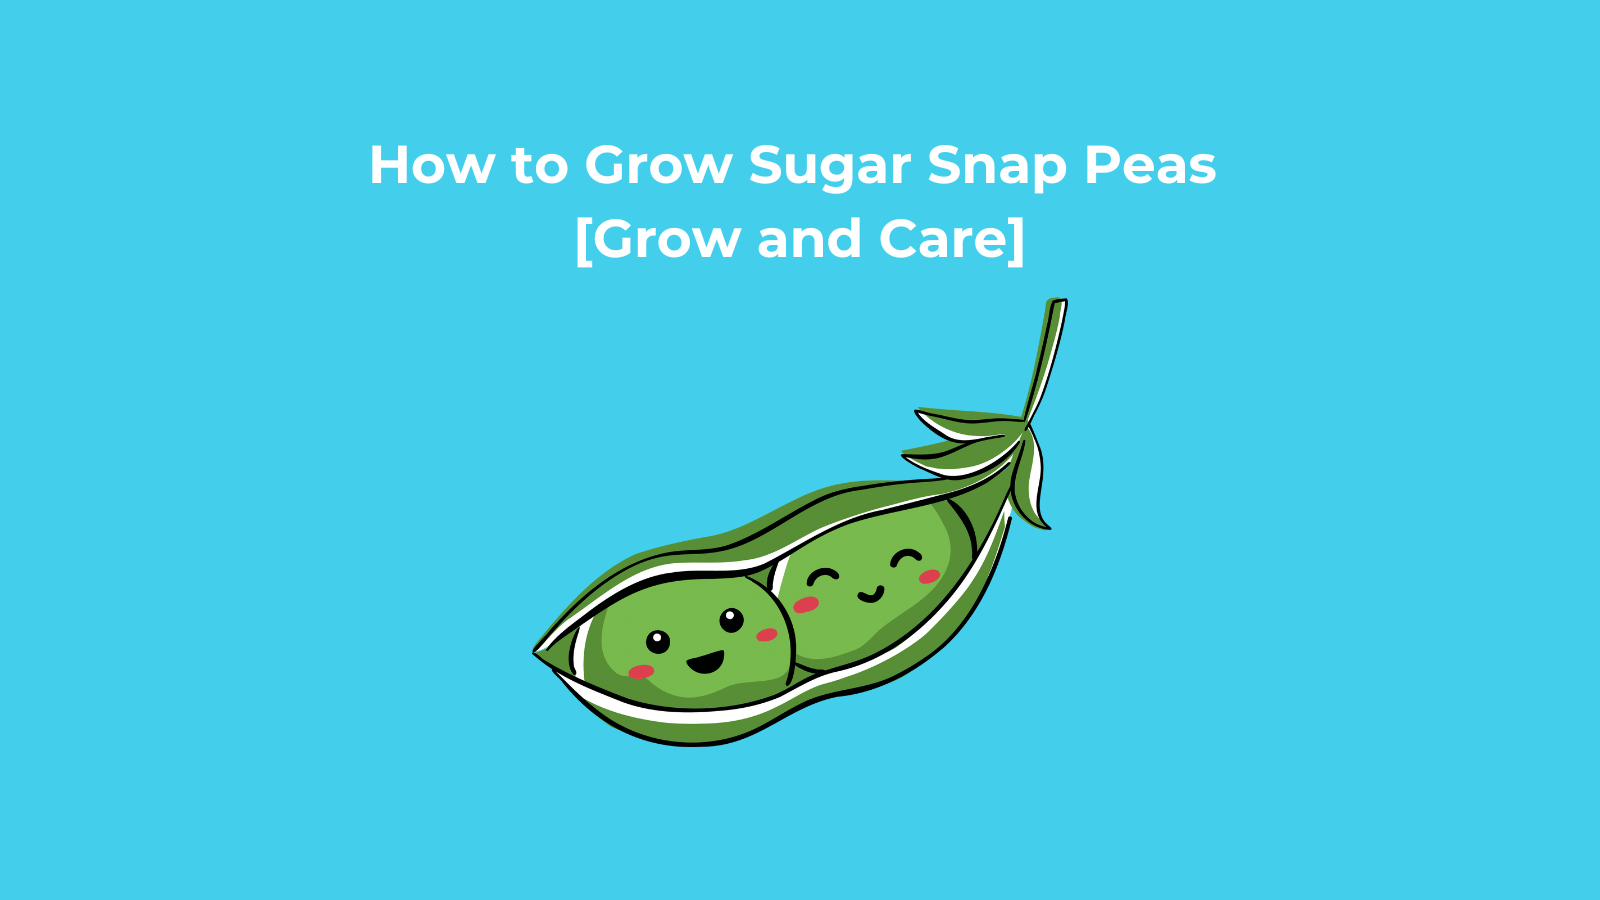 How to Grow Sugar Snap Peas - Grow and Care